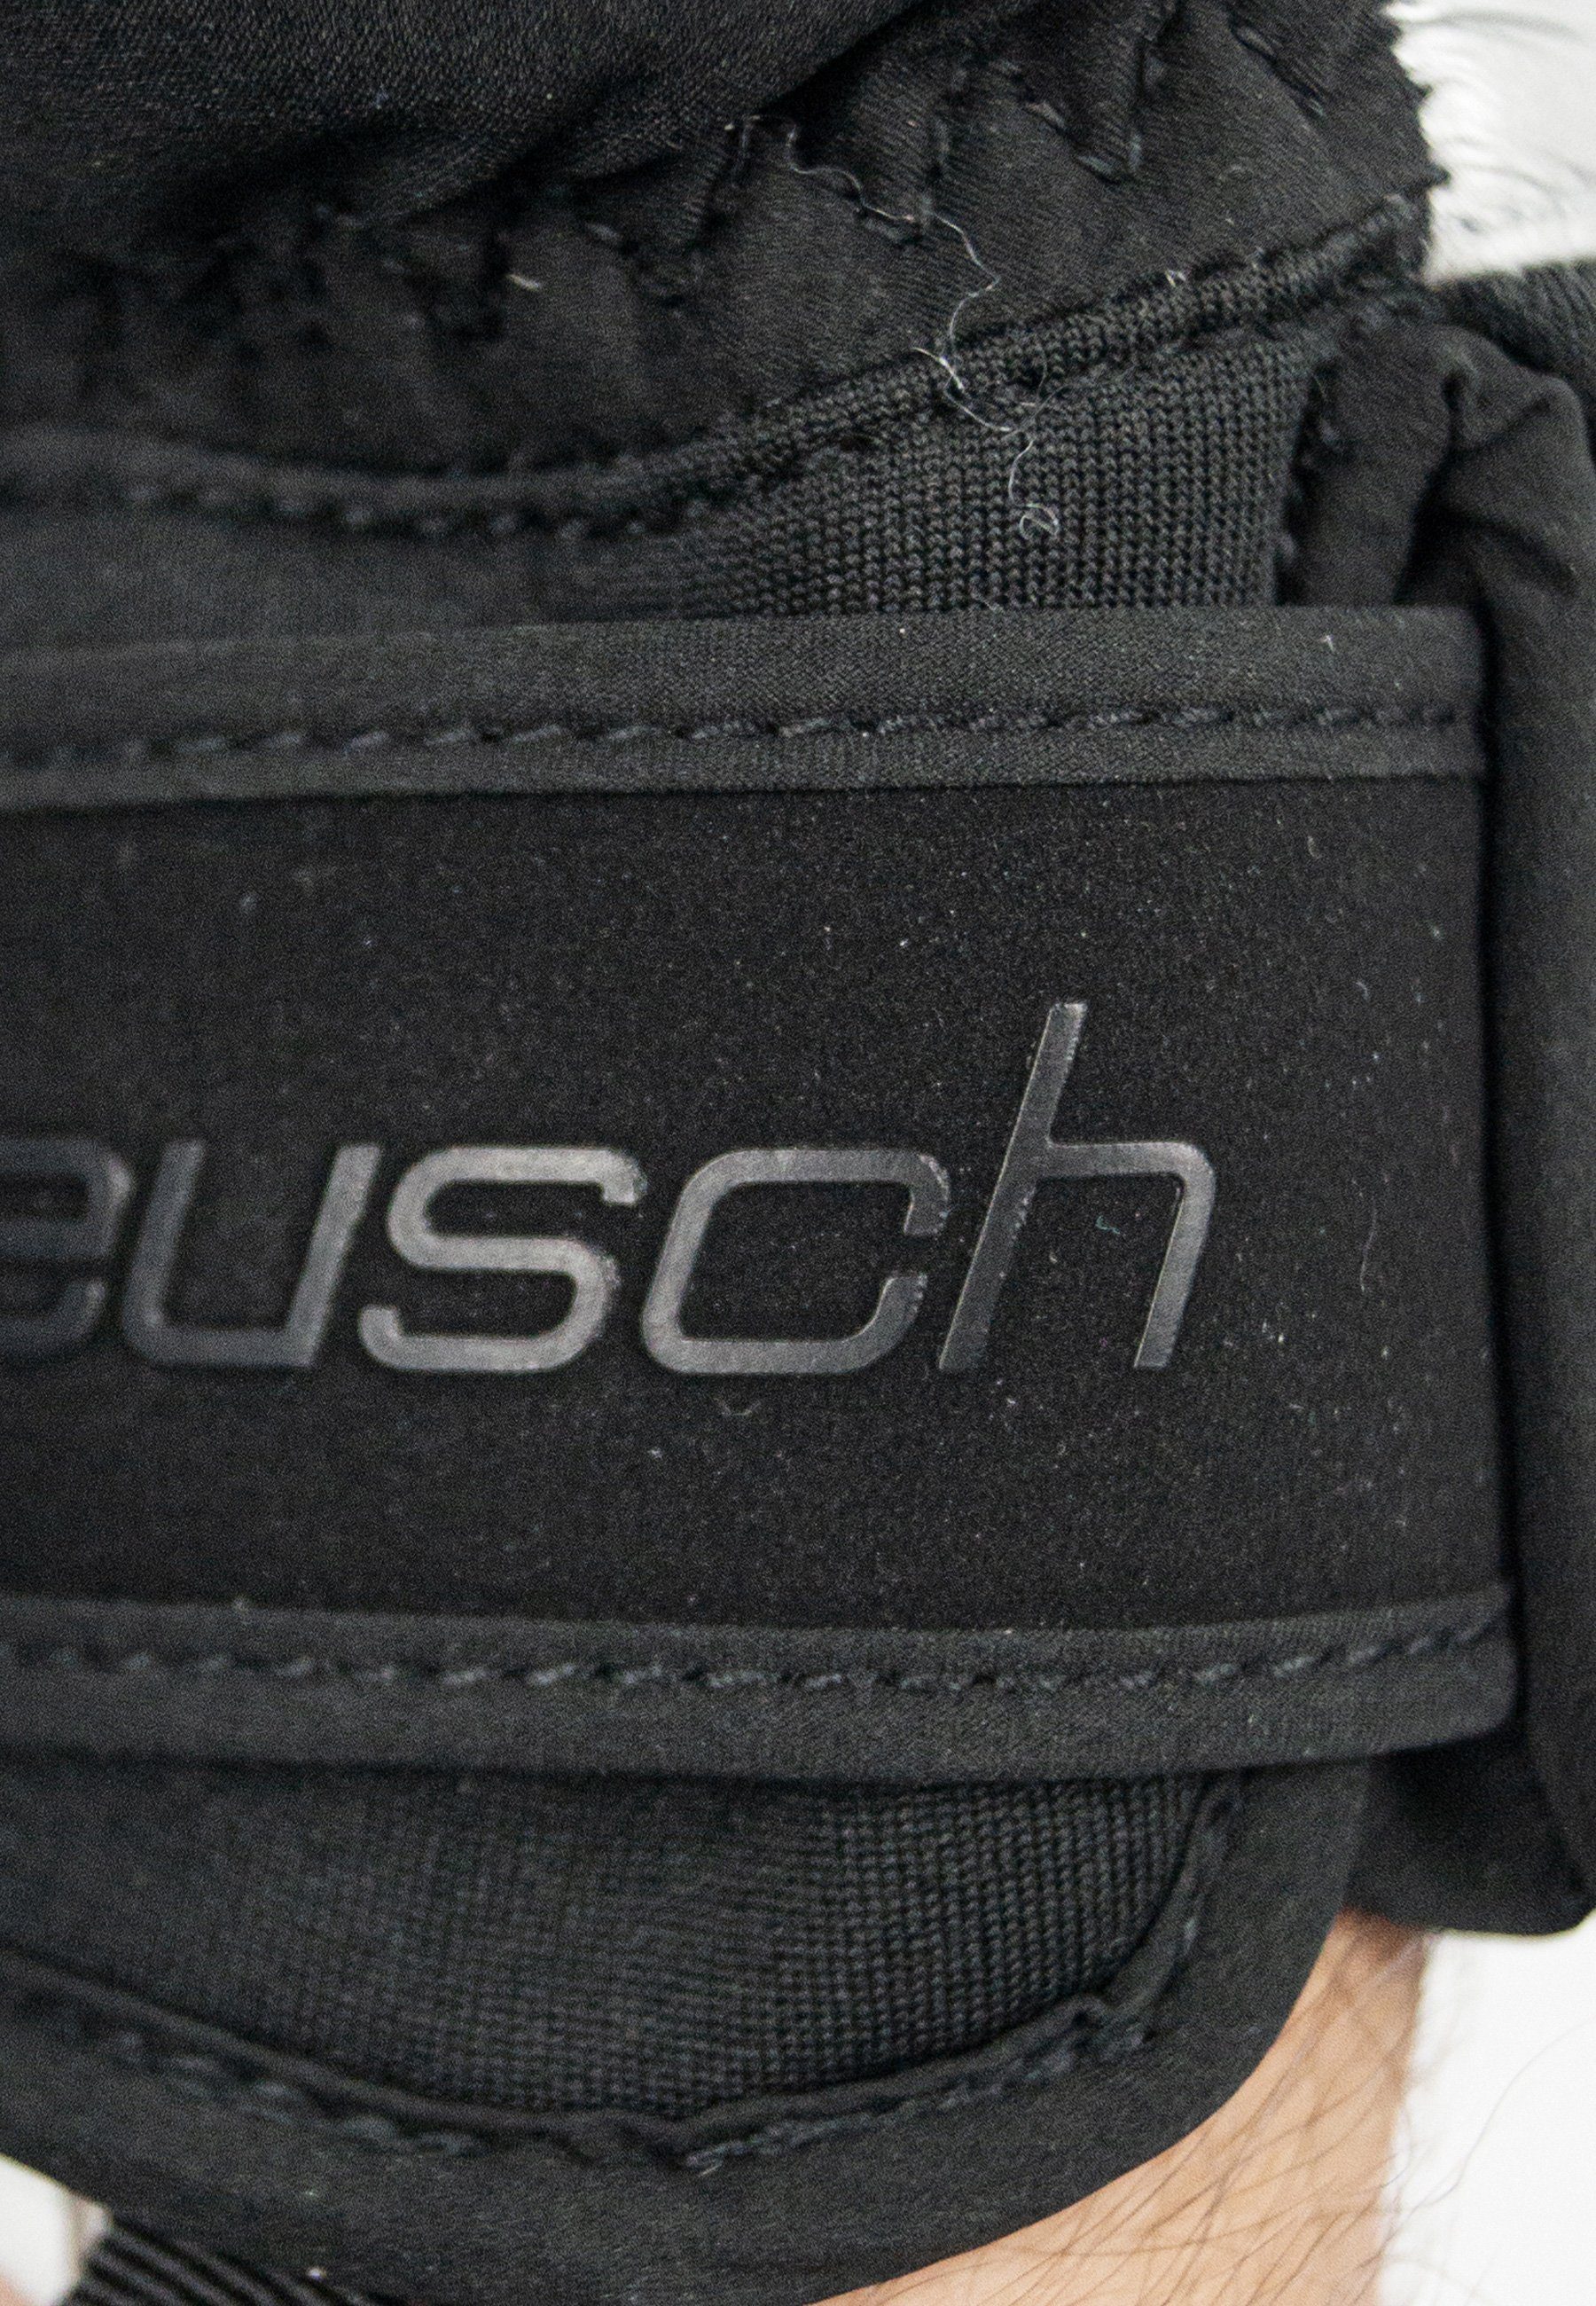 Reusch Skihandschuhe GORE-TEX Feather wasserdichter mit silberfarben-schwarz Funktionsmembran